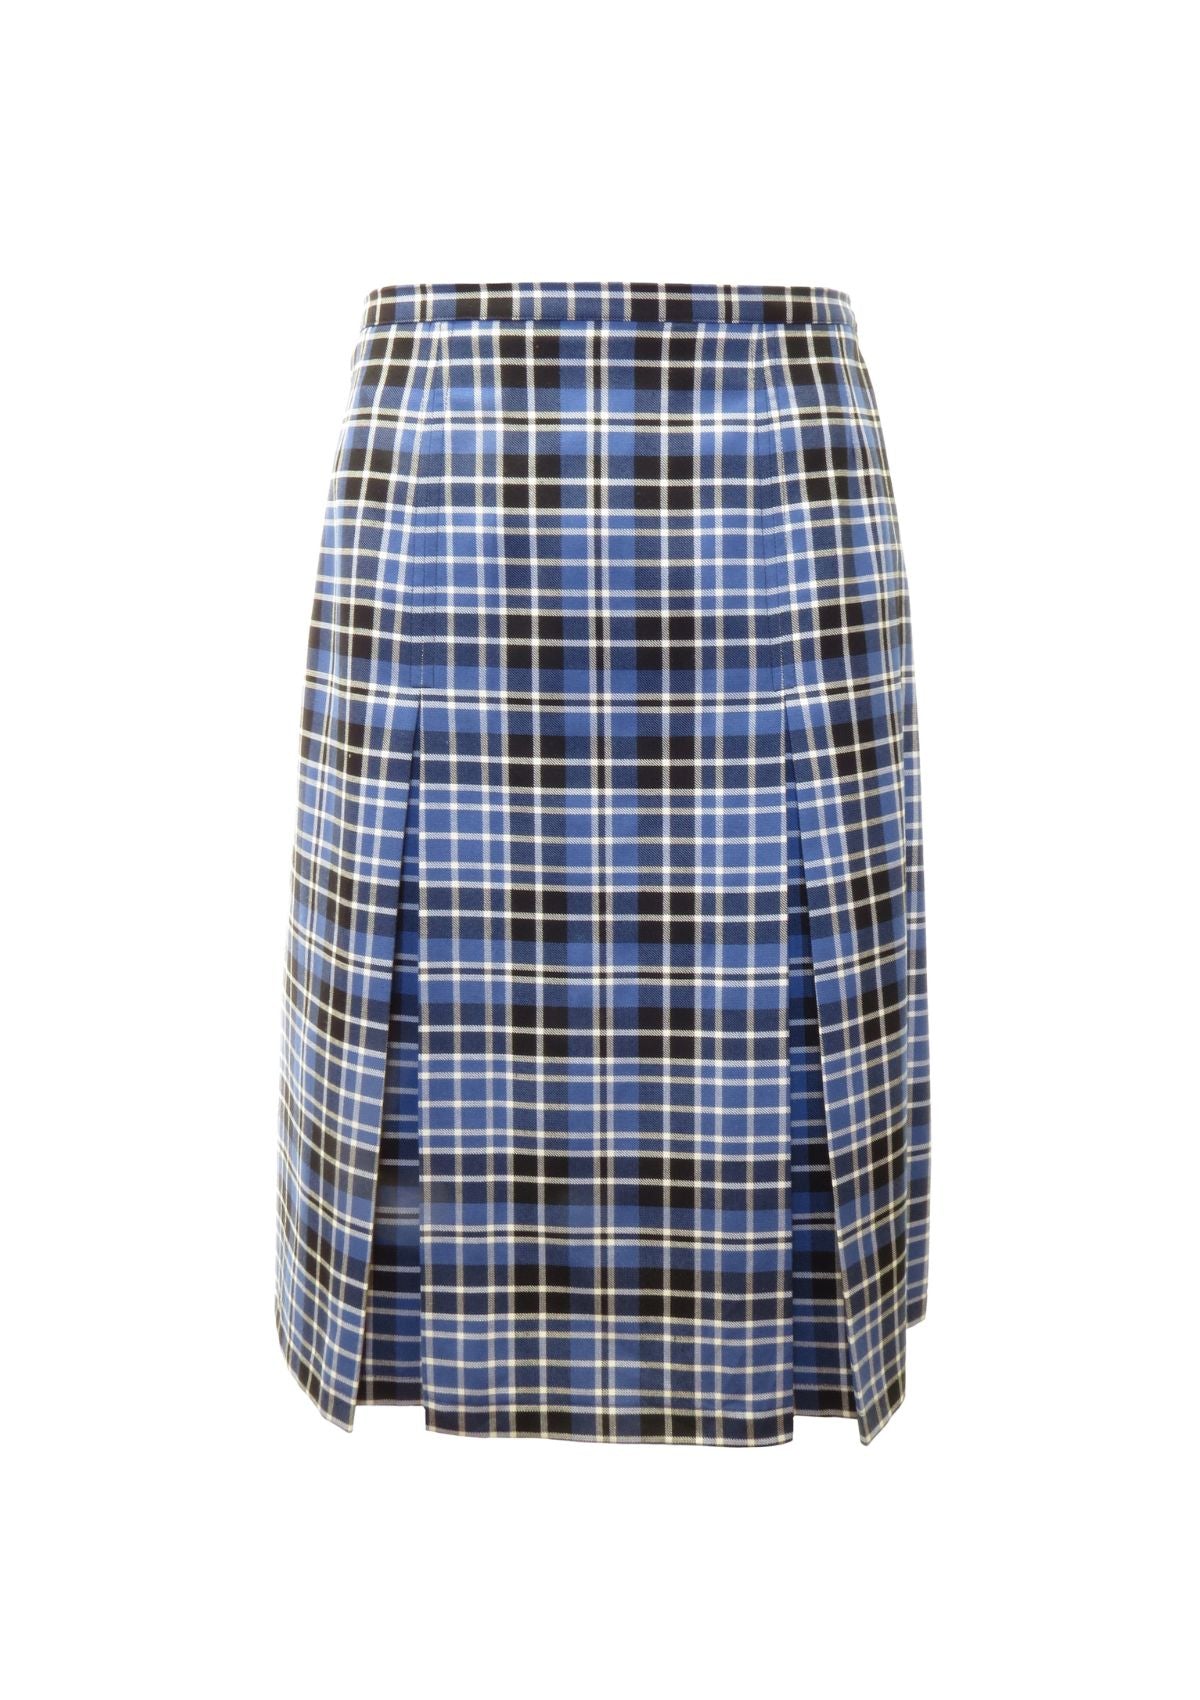 Ellenfield college skirt